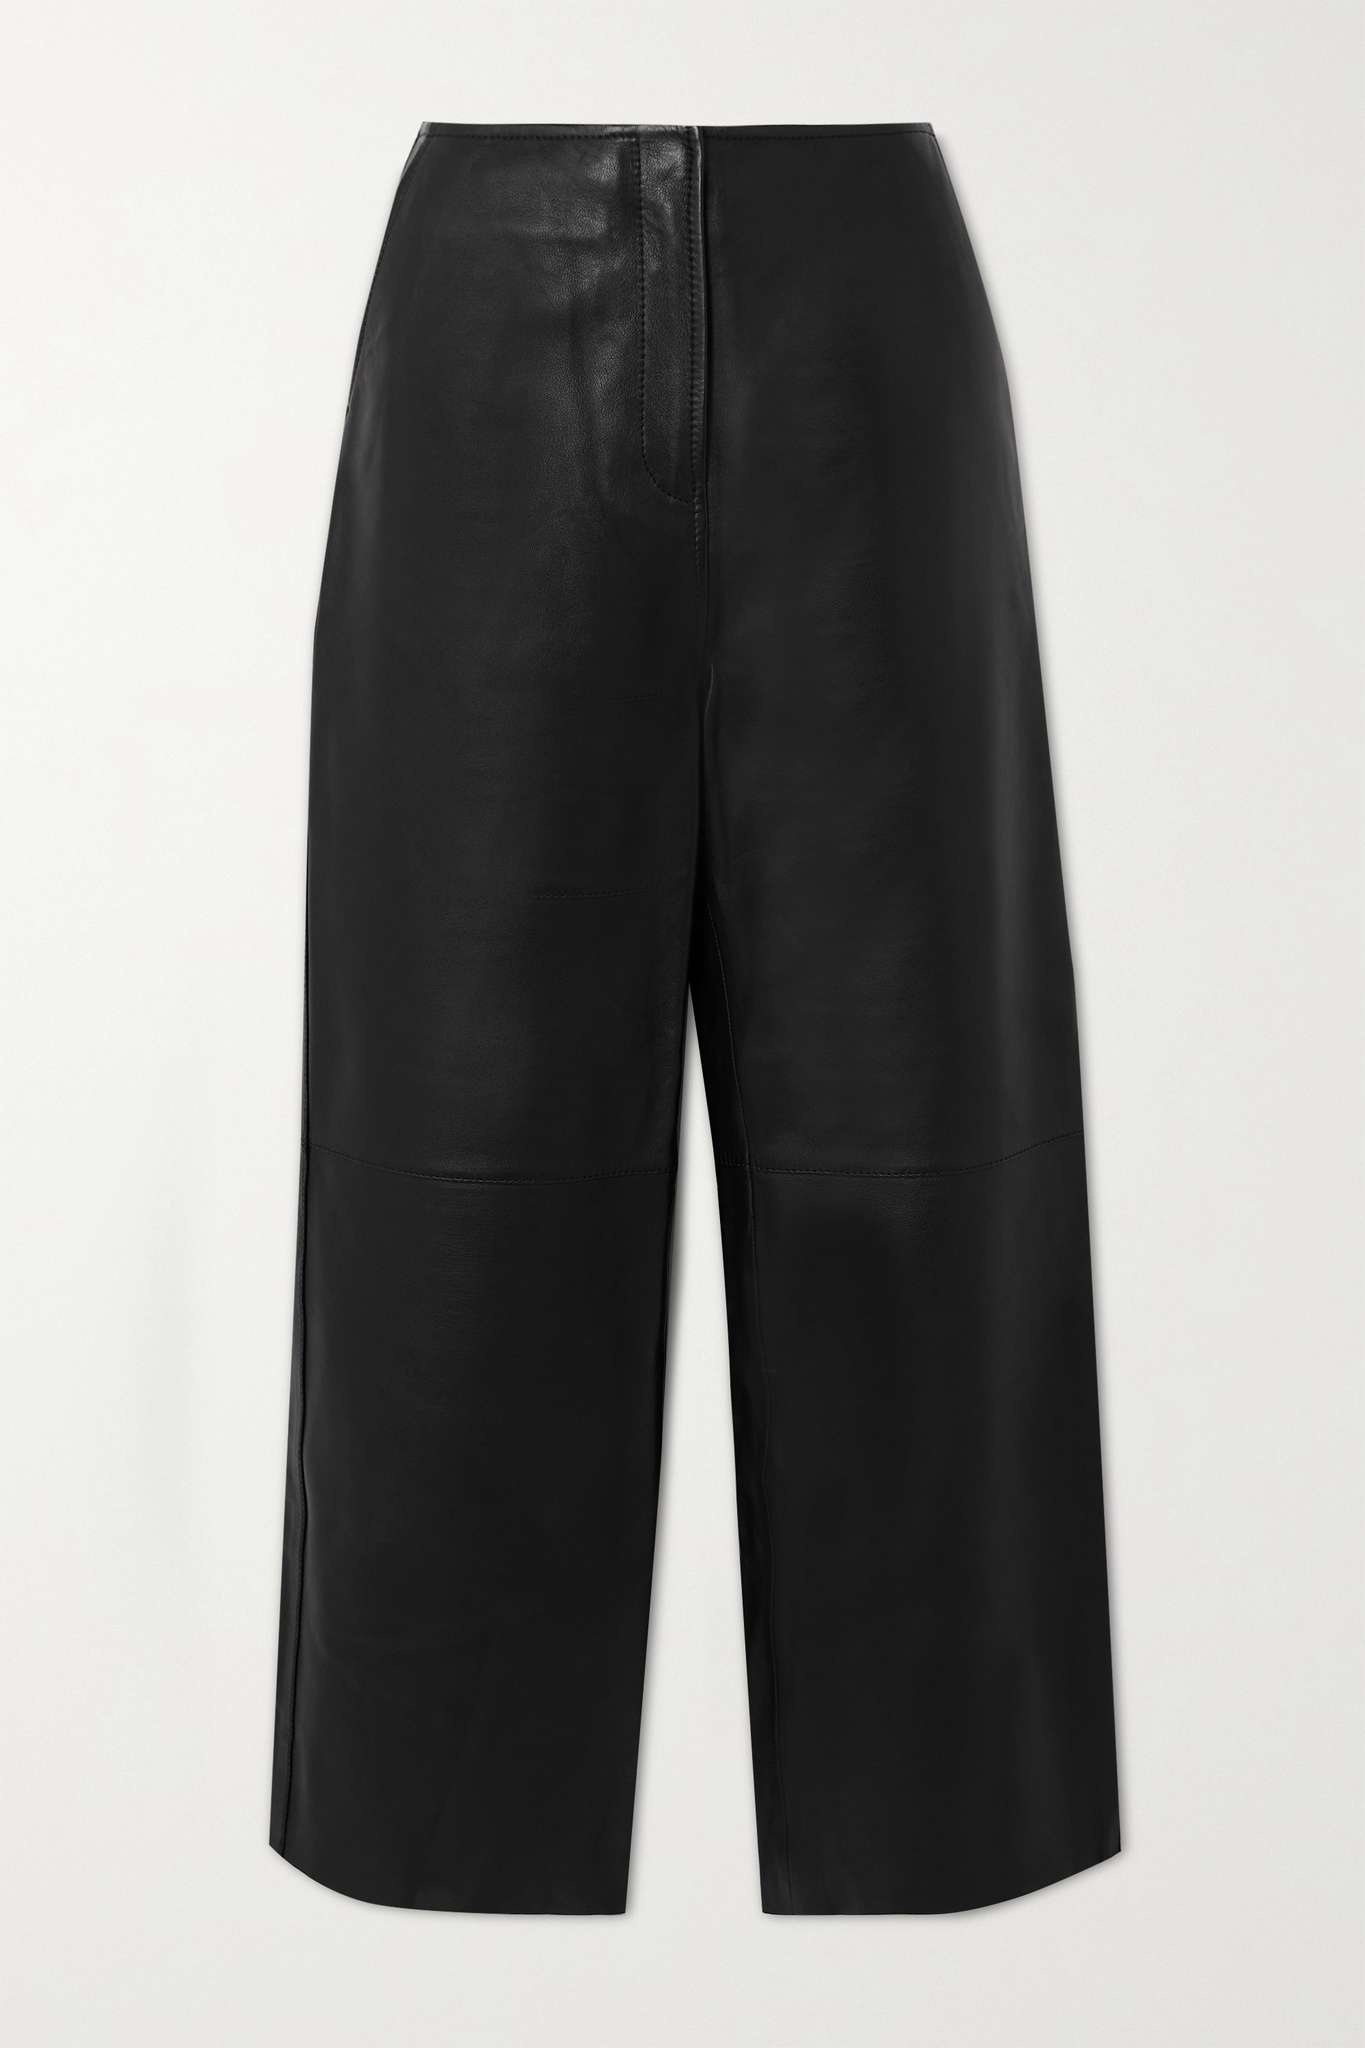 + NET SUSTAIN paneled leather wide-leg pants - 1